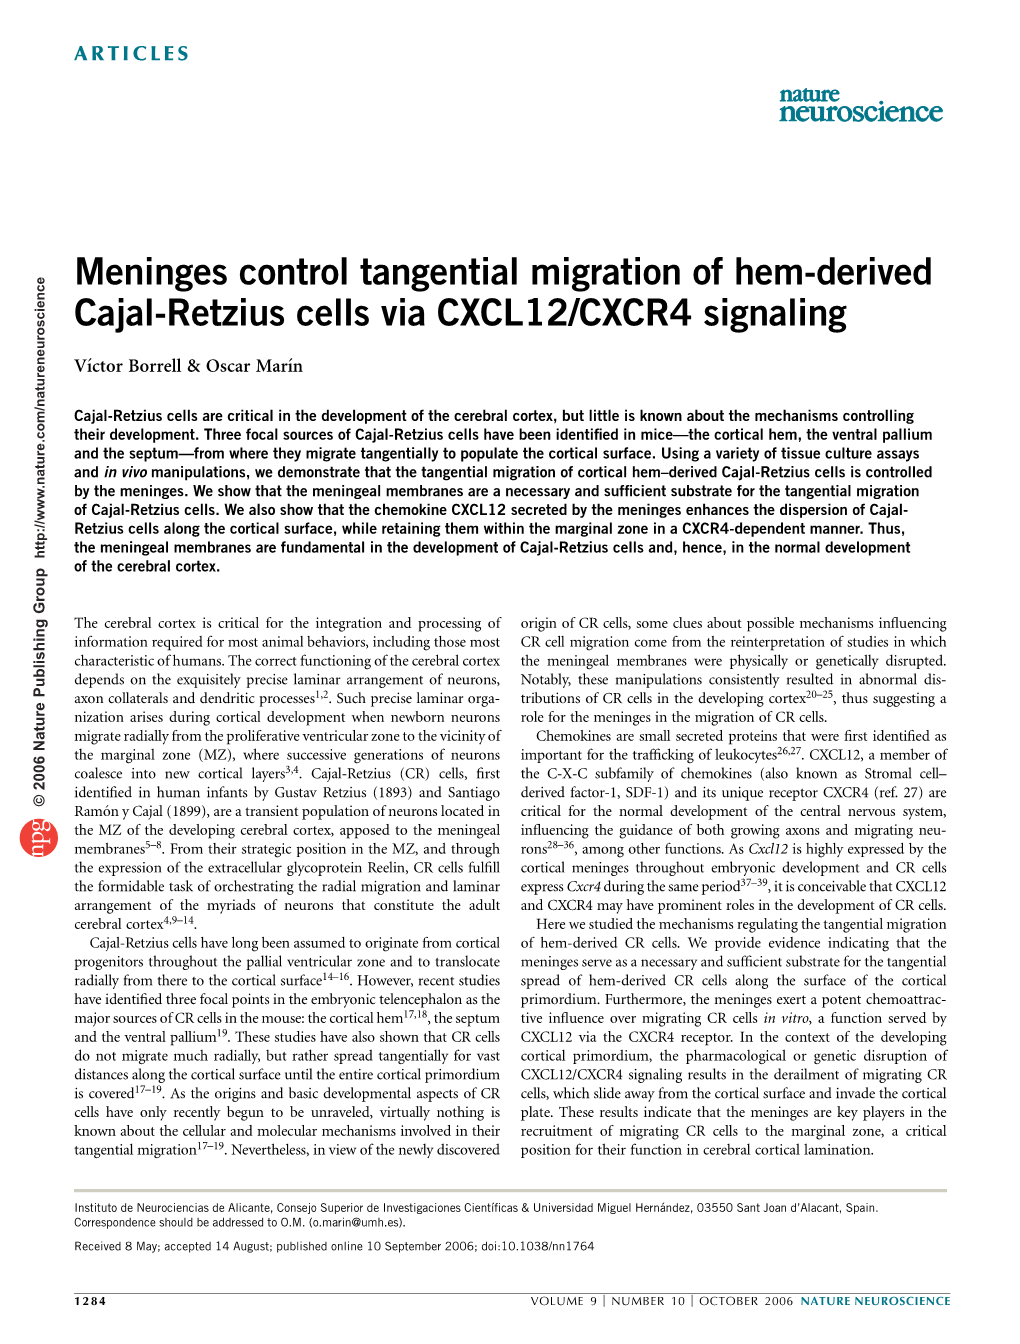 Meninges Control Tangential Migration of Hem-Derived Cajal-Retzius Cells Via CXCL12/CXCR4 Signaling